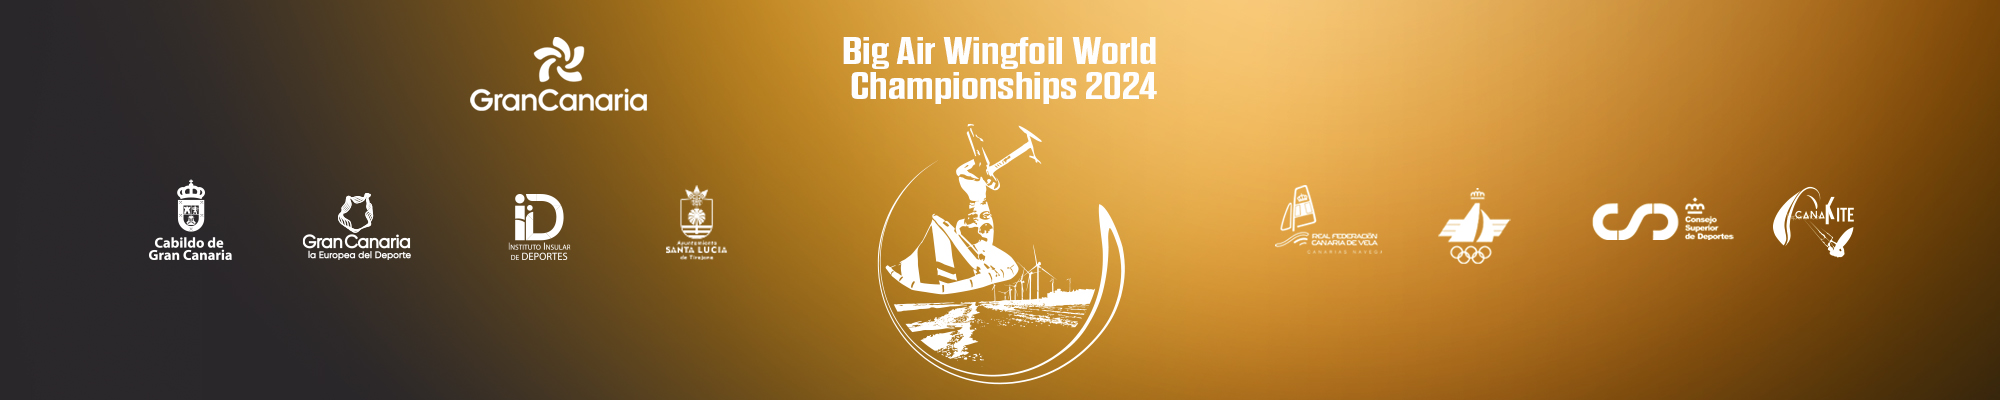 Image for GWA Big Air Wingfoil World Championships Gran Canaria 2024